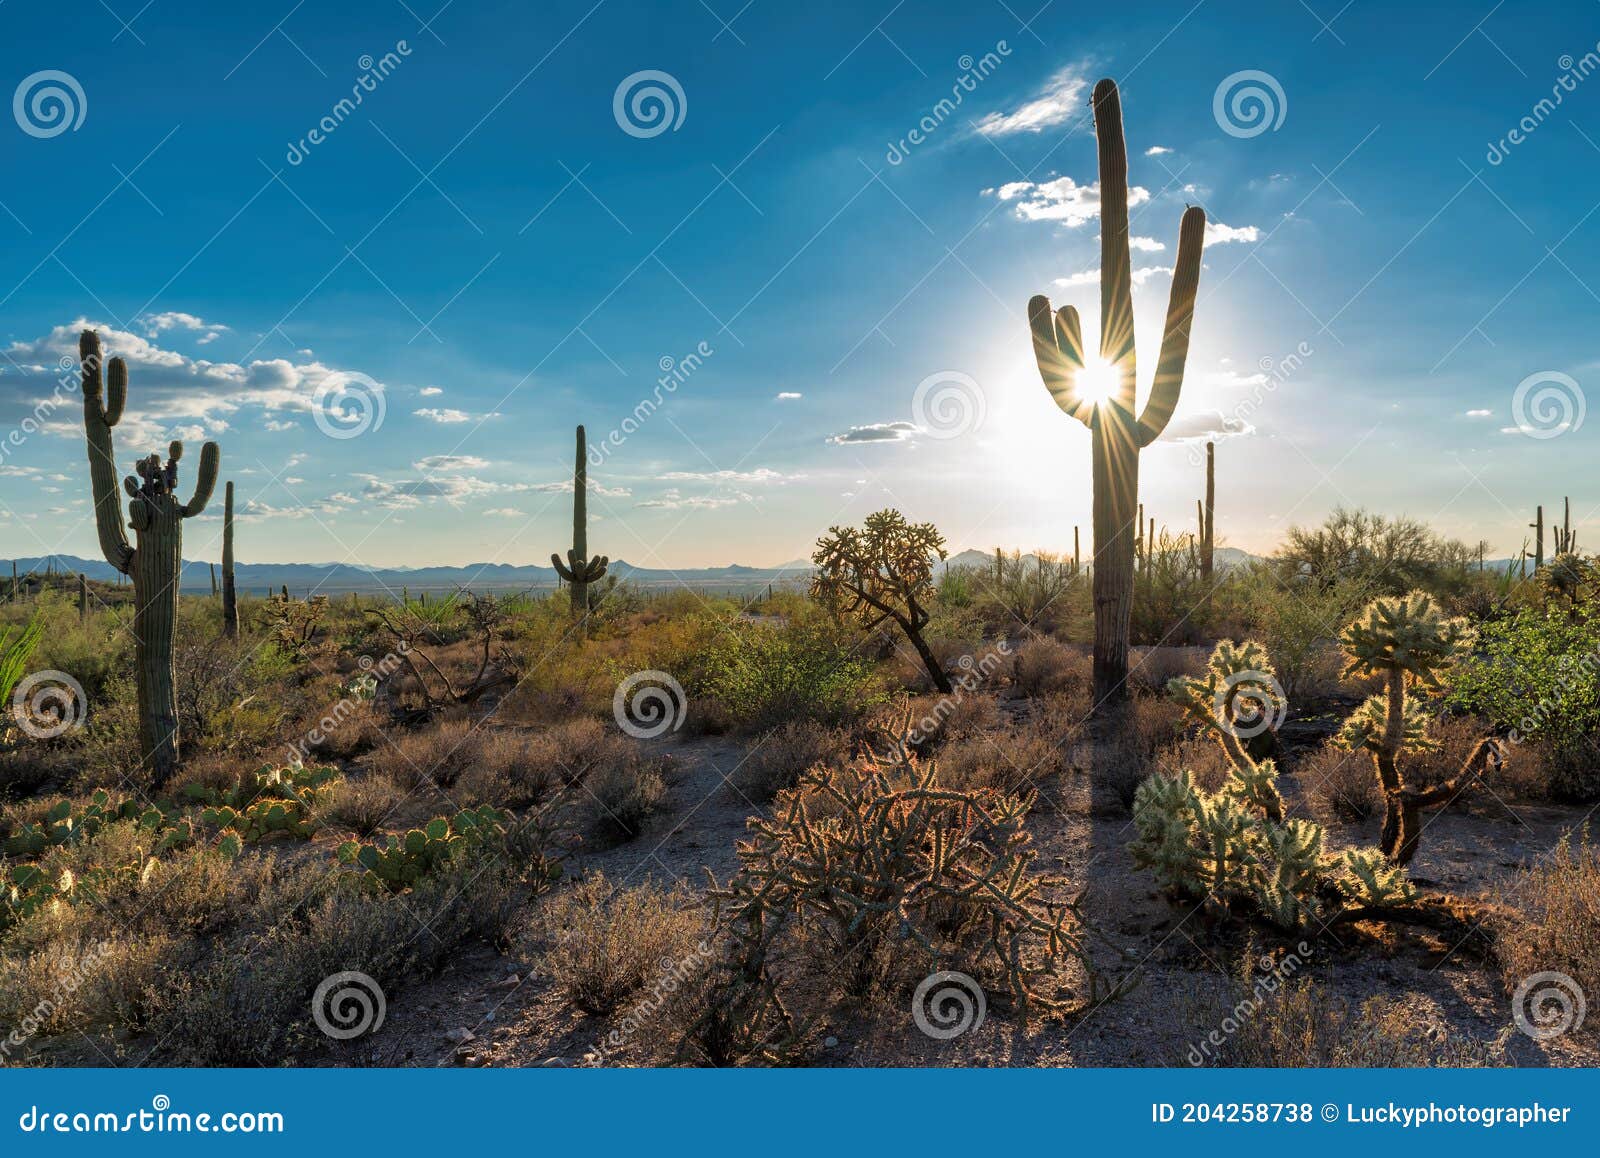 saguaros at sunset in sonoran desert near phoenix, arizona